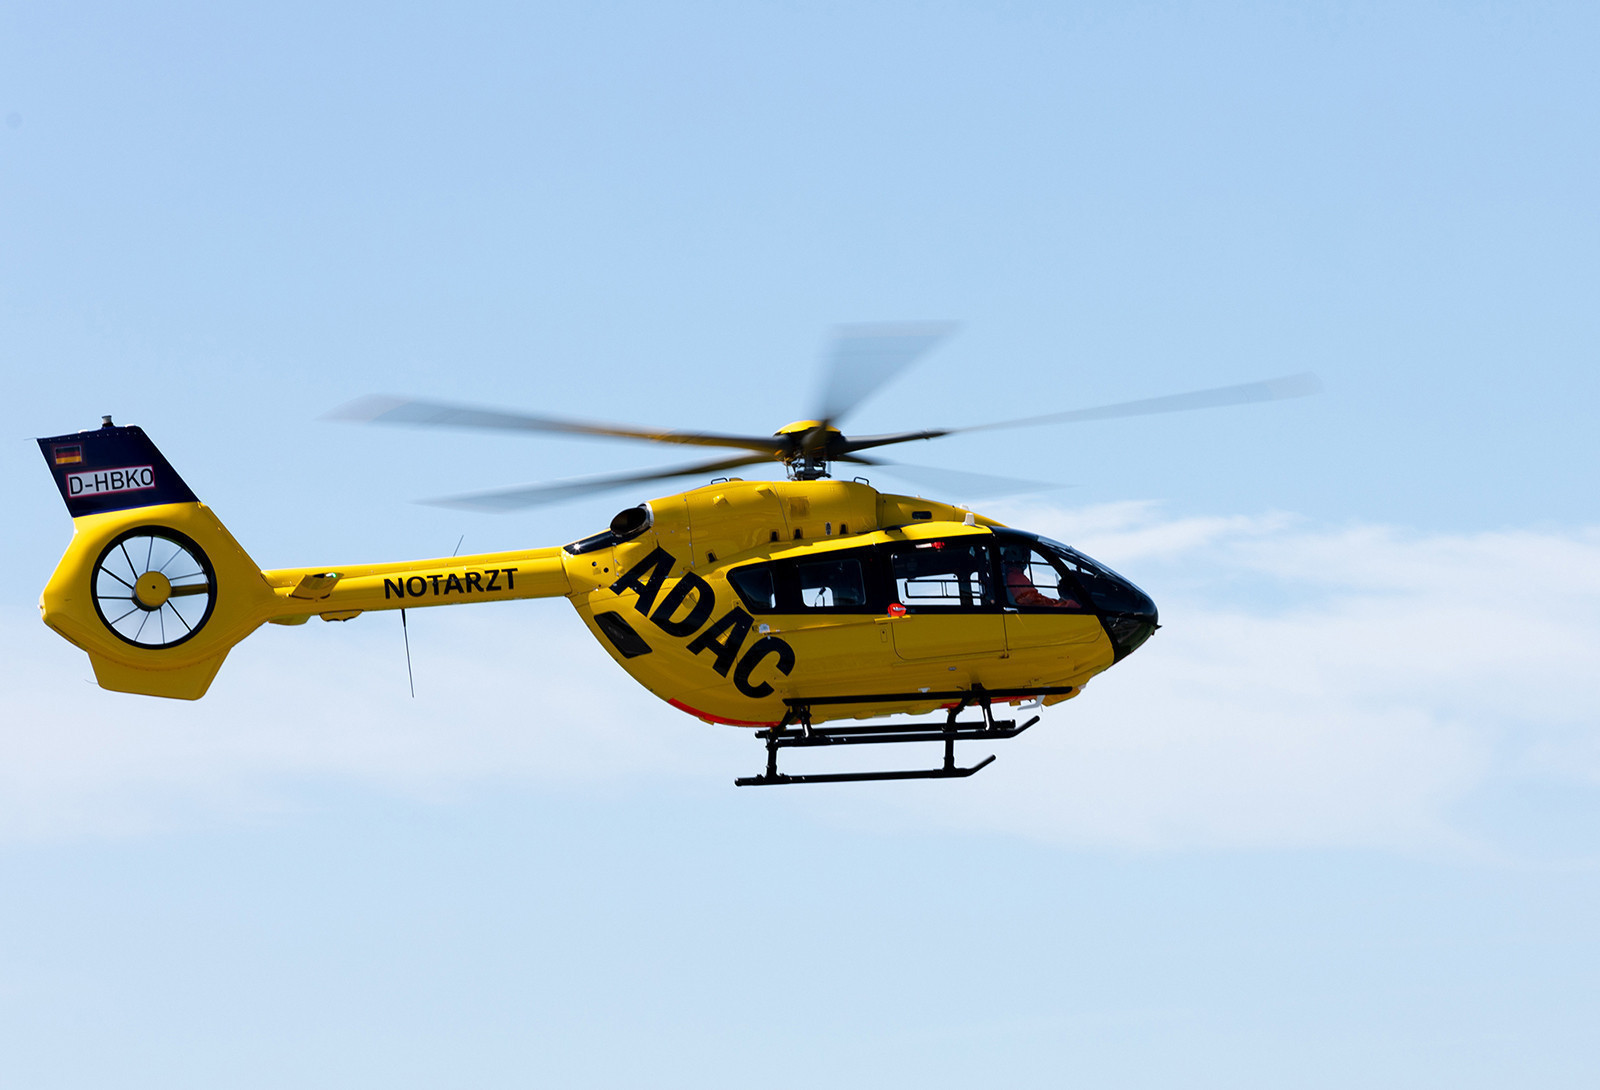 Drohne versperrt Rettungshubschrauber die Landung